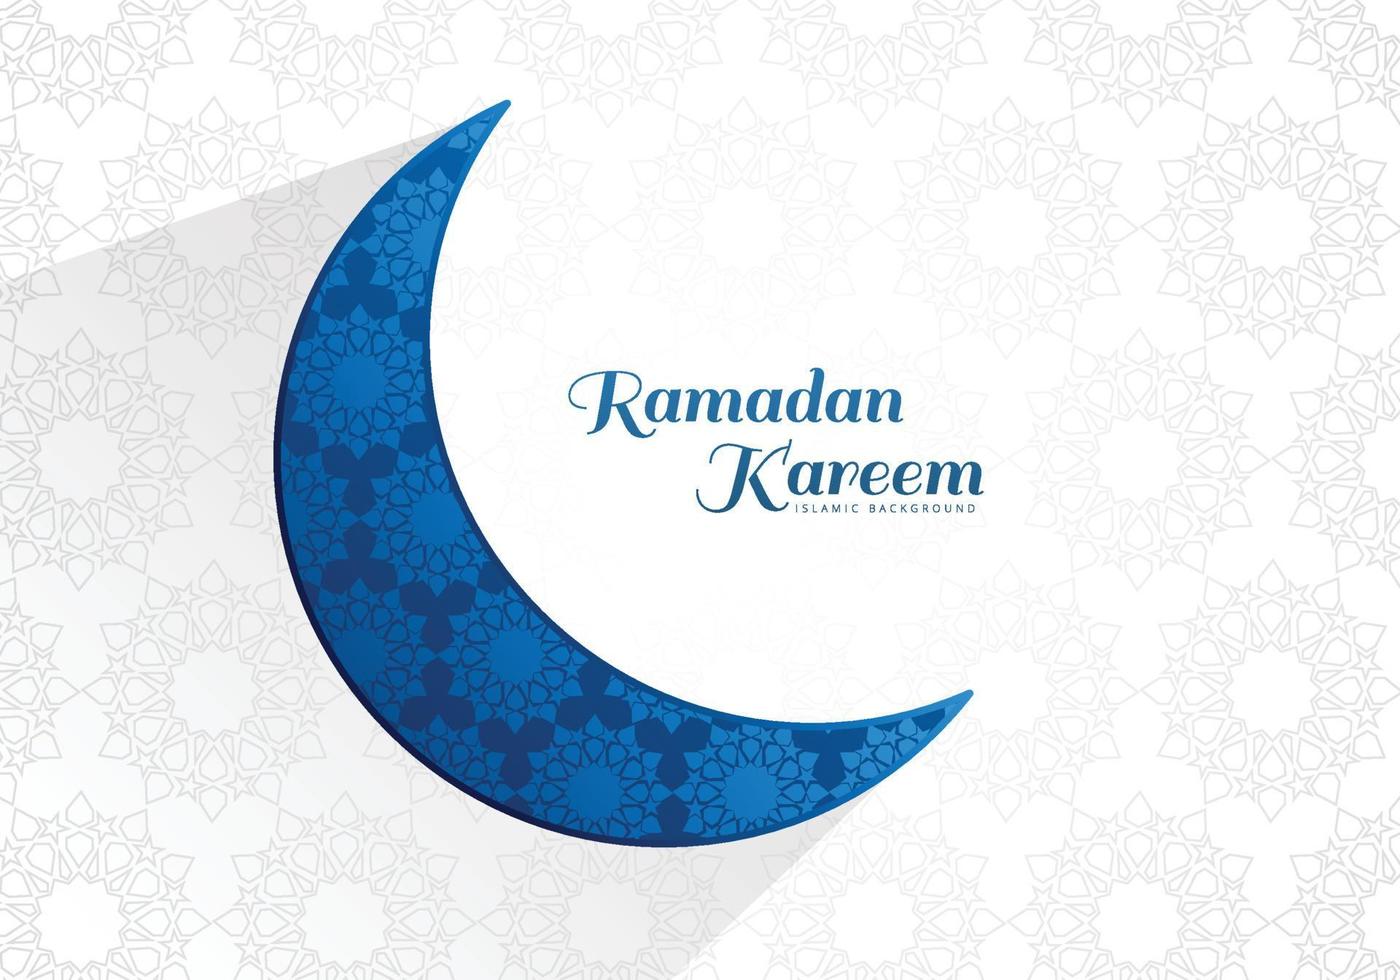 Ramadan kareem islamic moon and mosque greeting card background vector